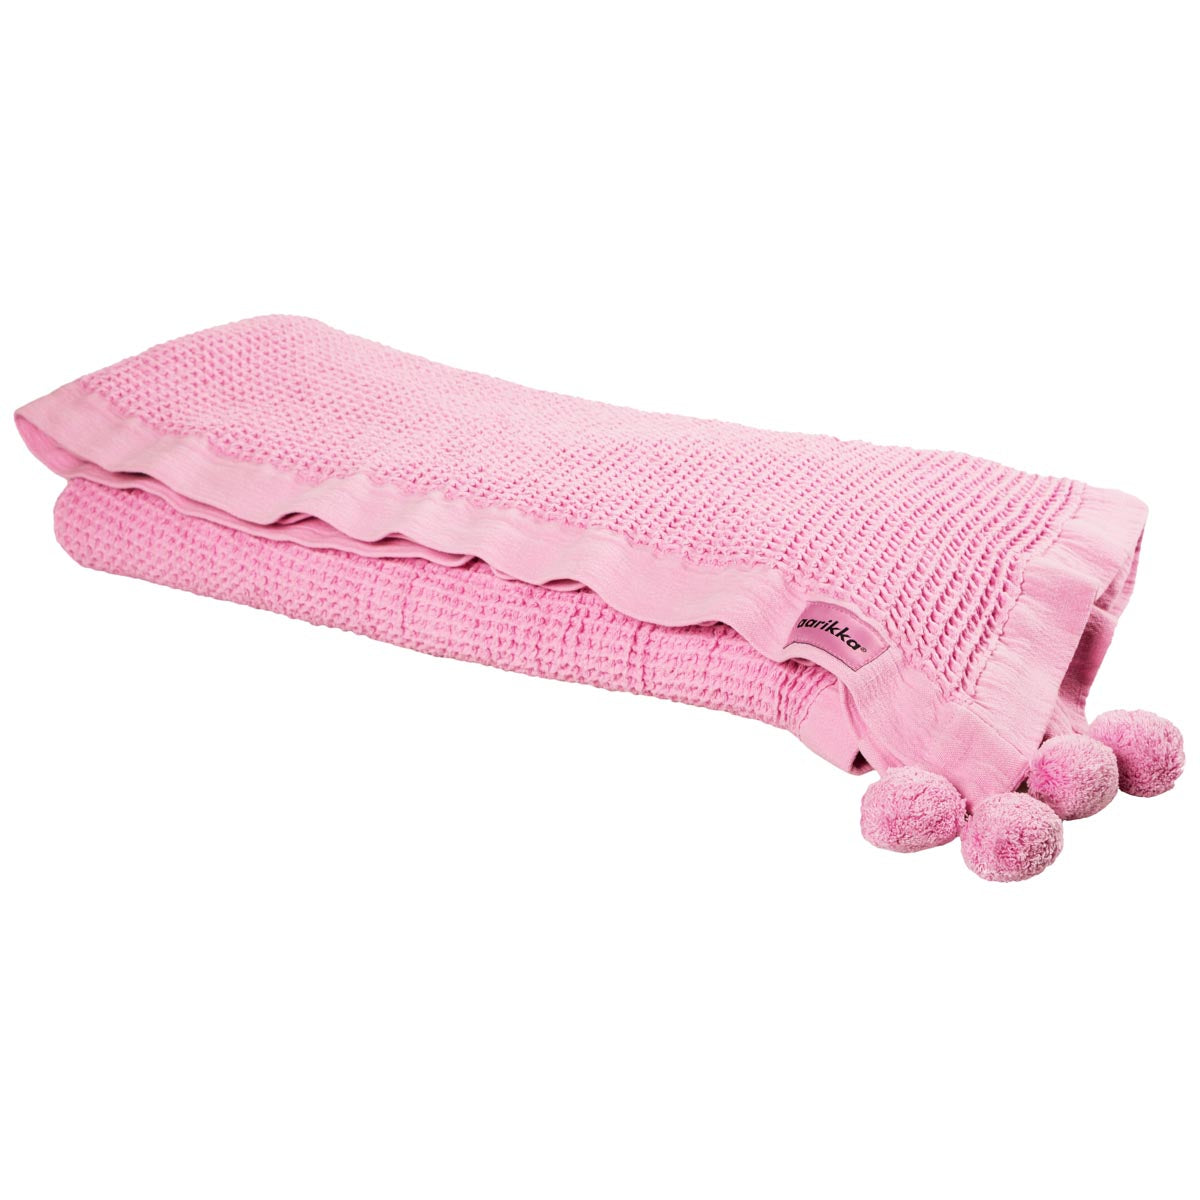 Pom pom blanket, pink